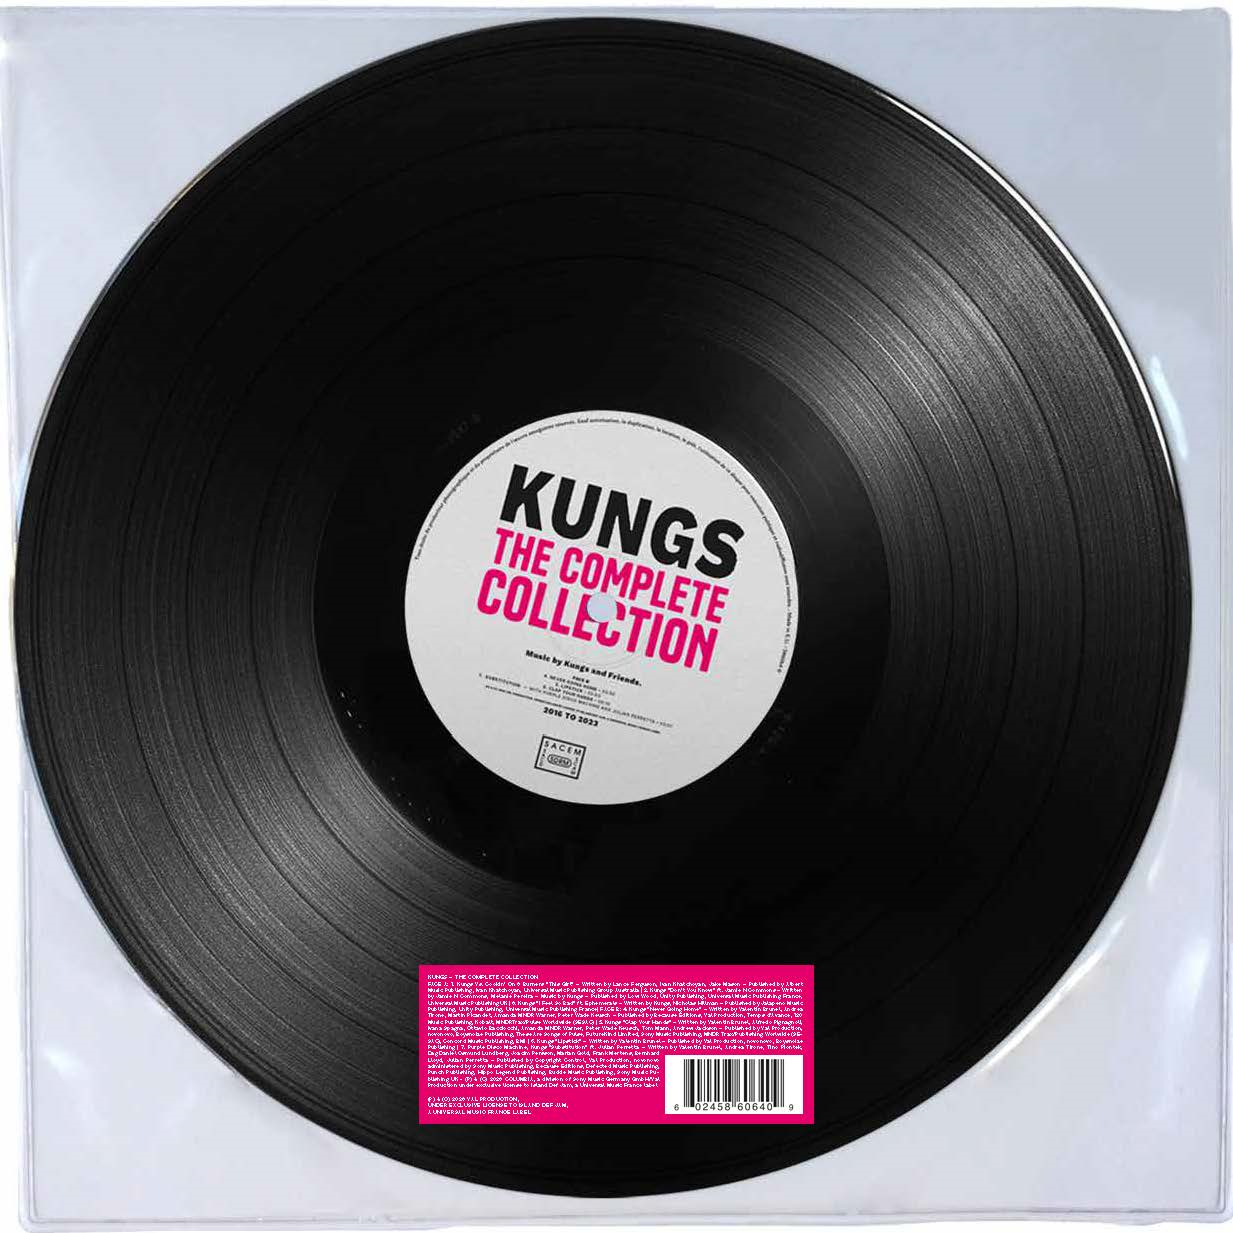 https://www.bravado.de/assets/asset_300x300/Kungs-The-Complete-Collection-Vinyl-506044-418466.png